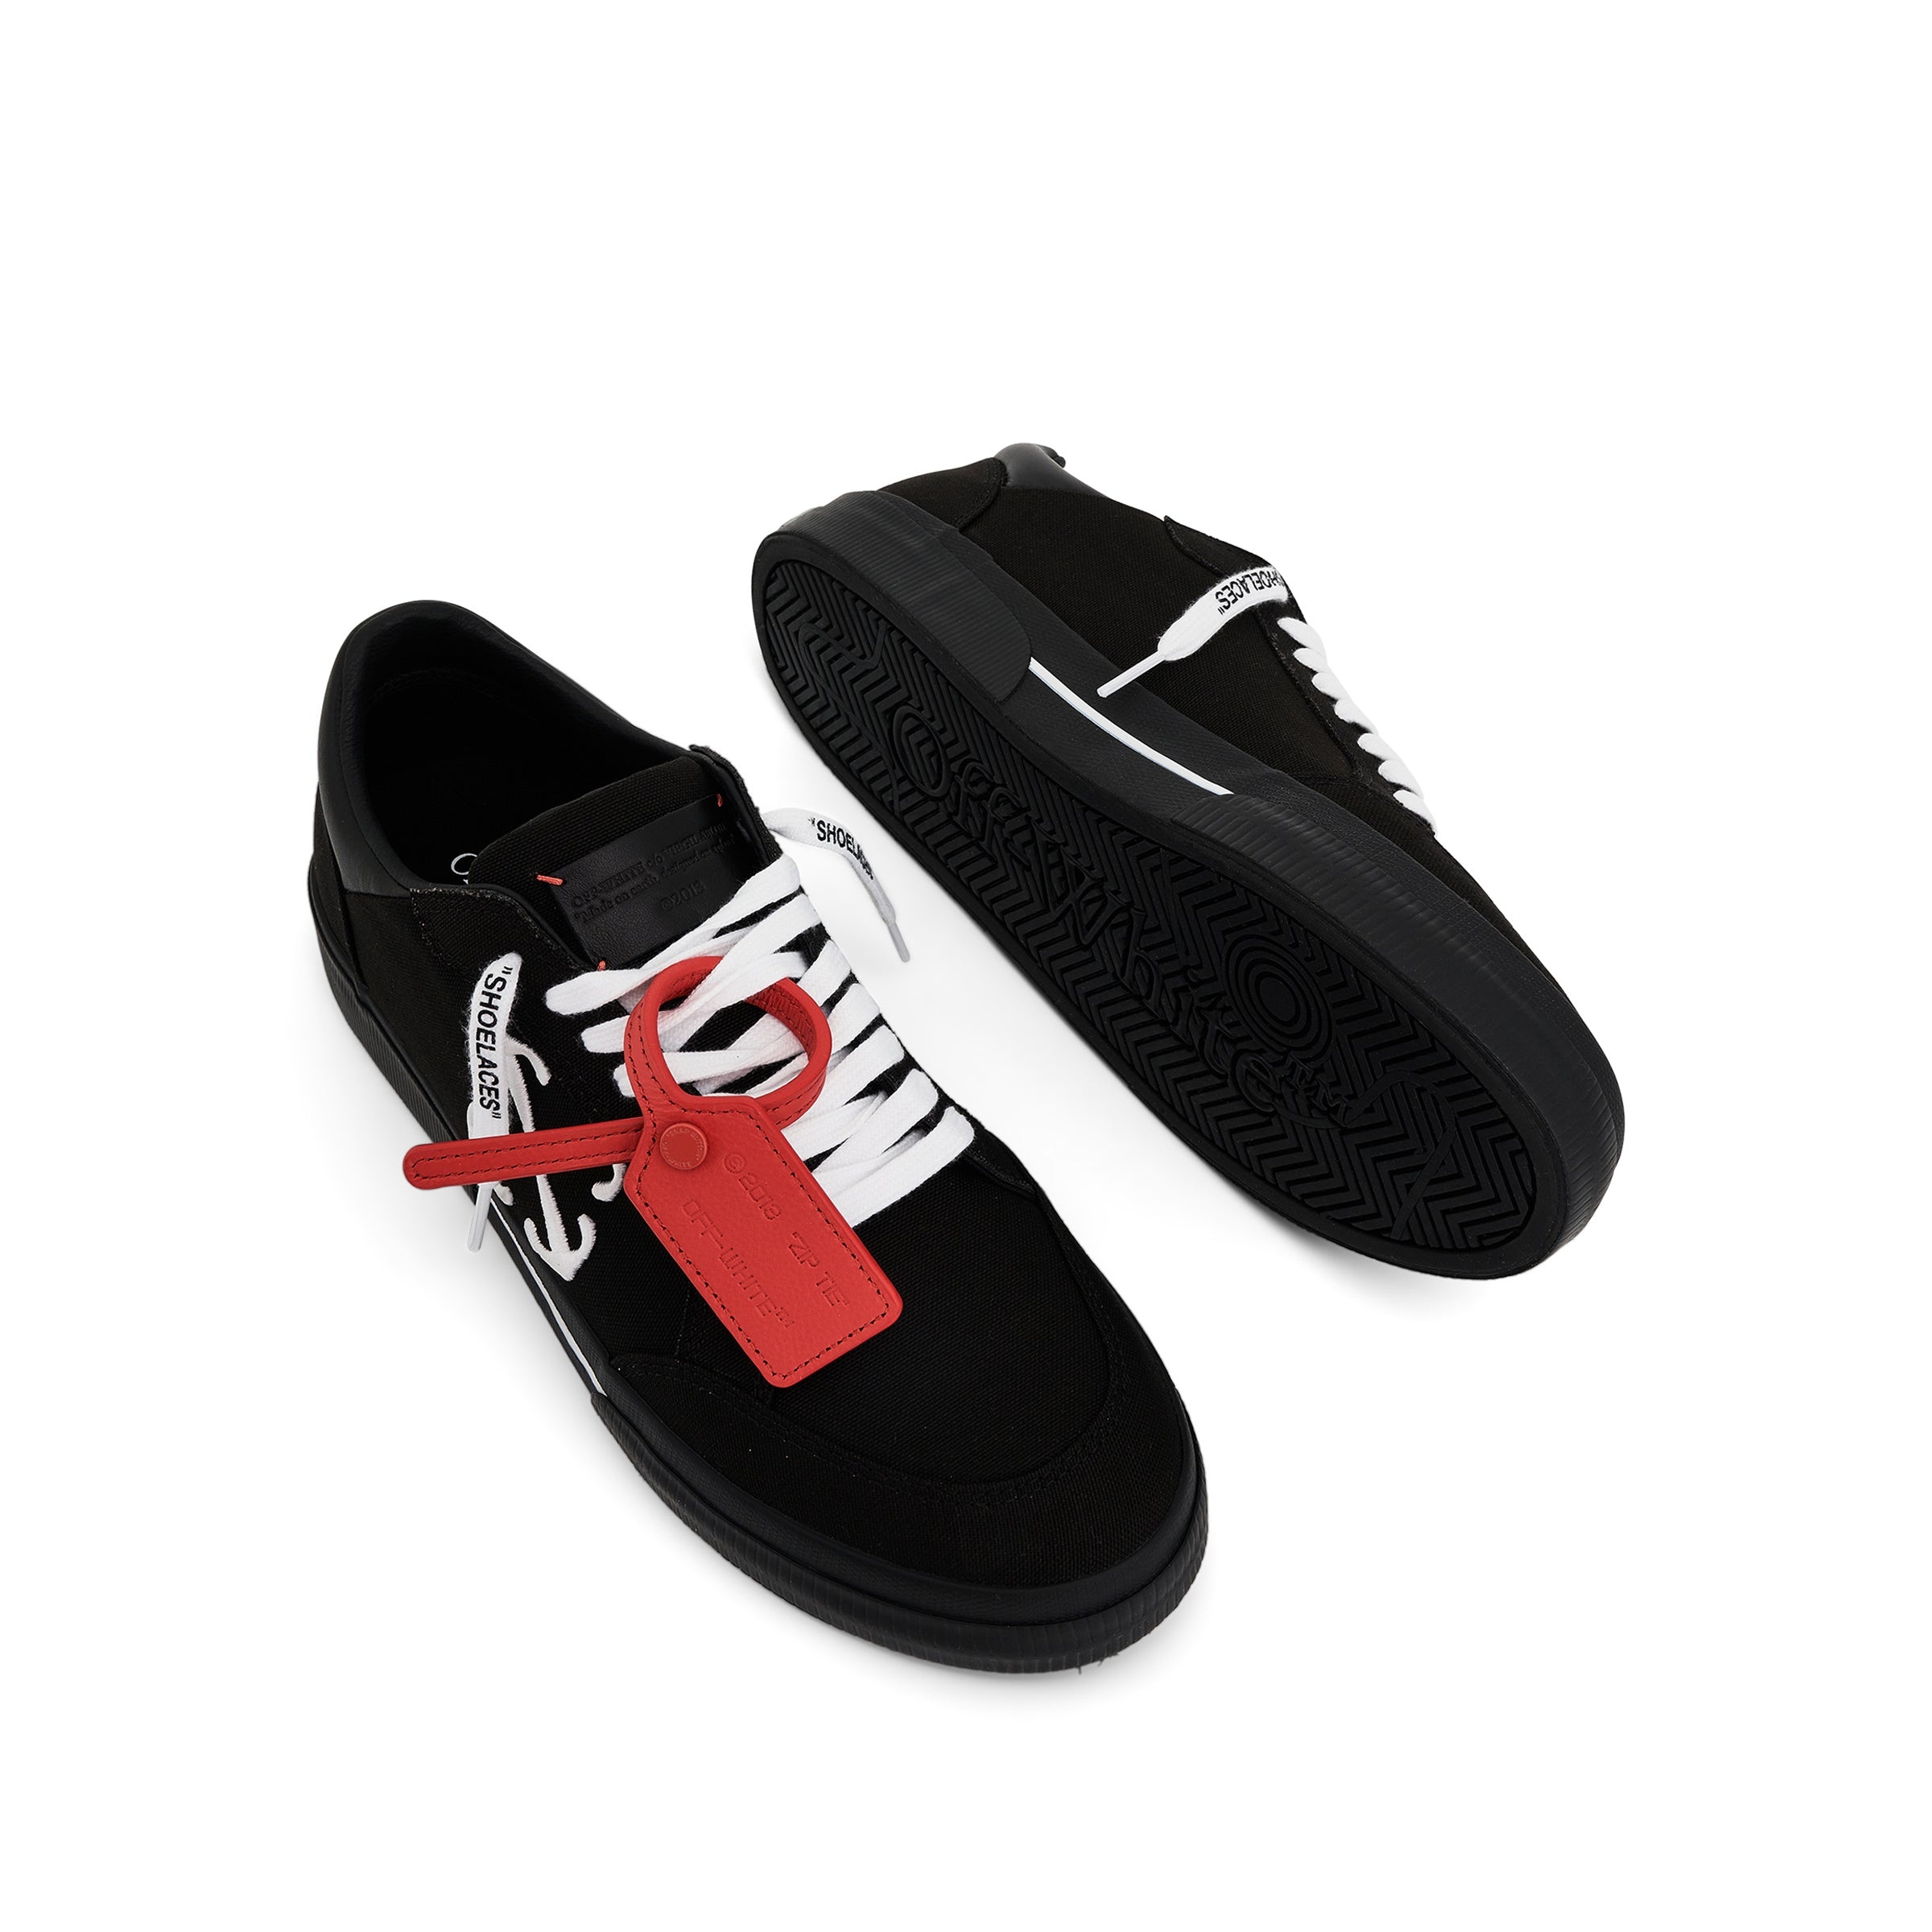 New Low Vulcanized Canvas Sneaker in Black/White - 4